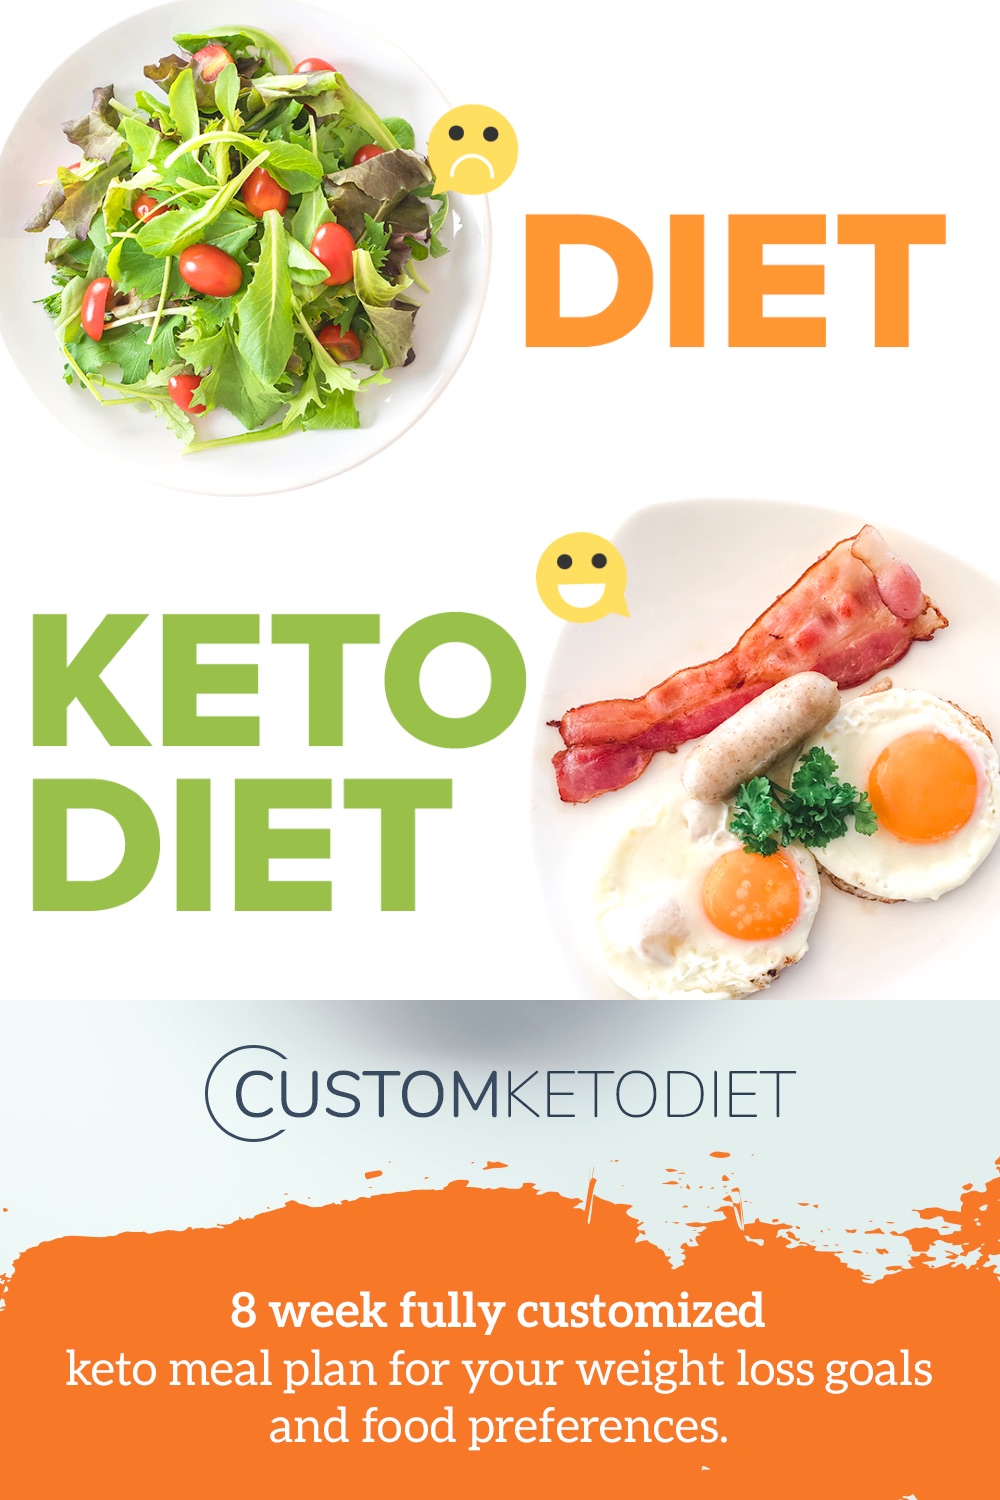 does custom keto diet work